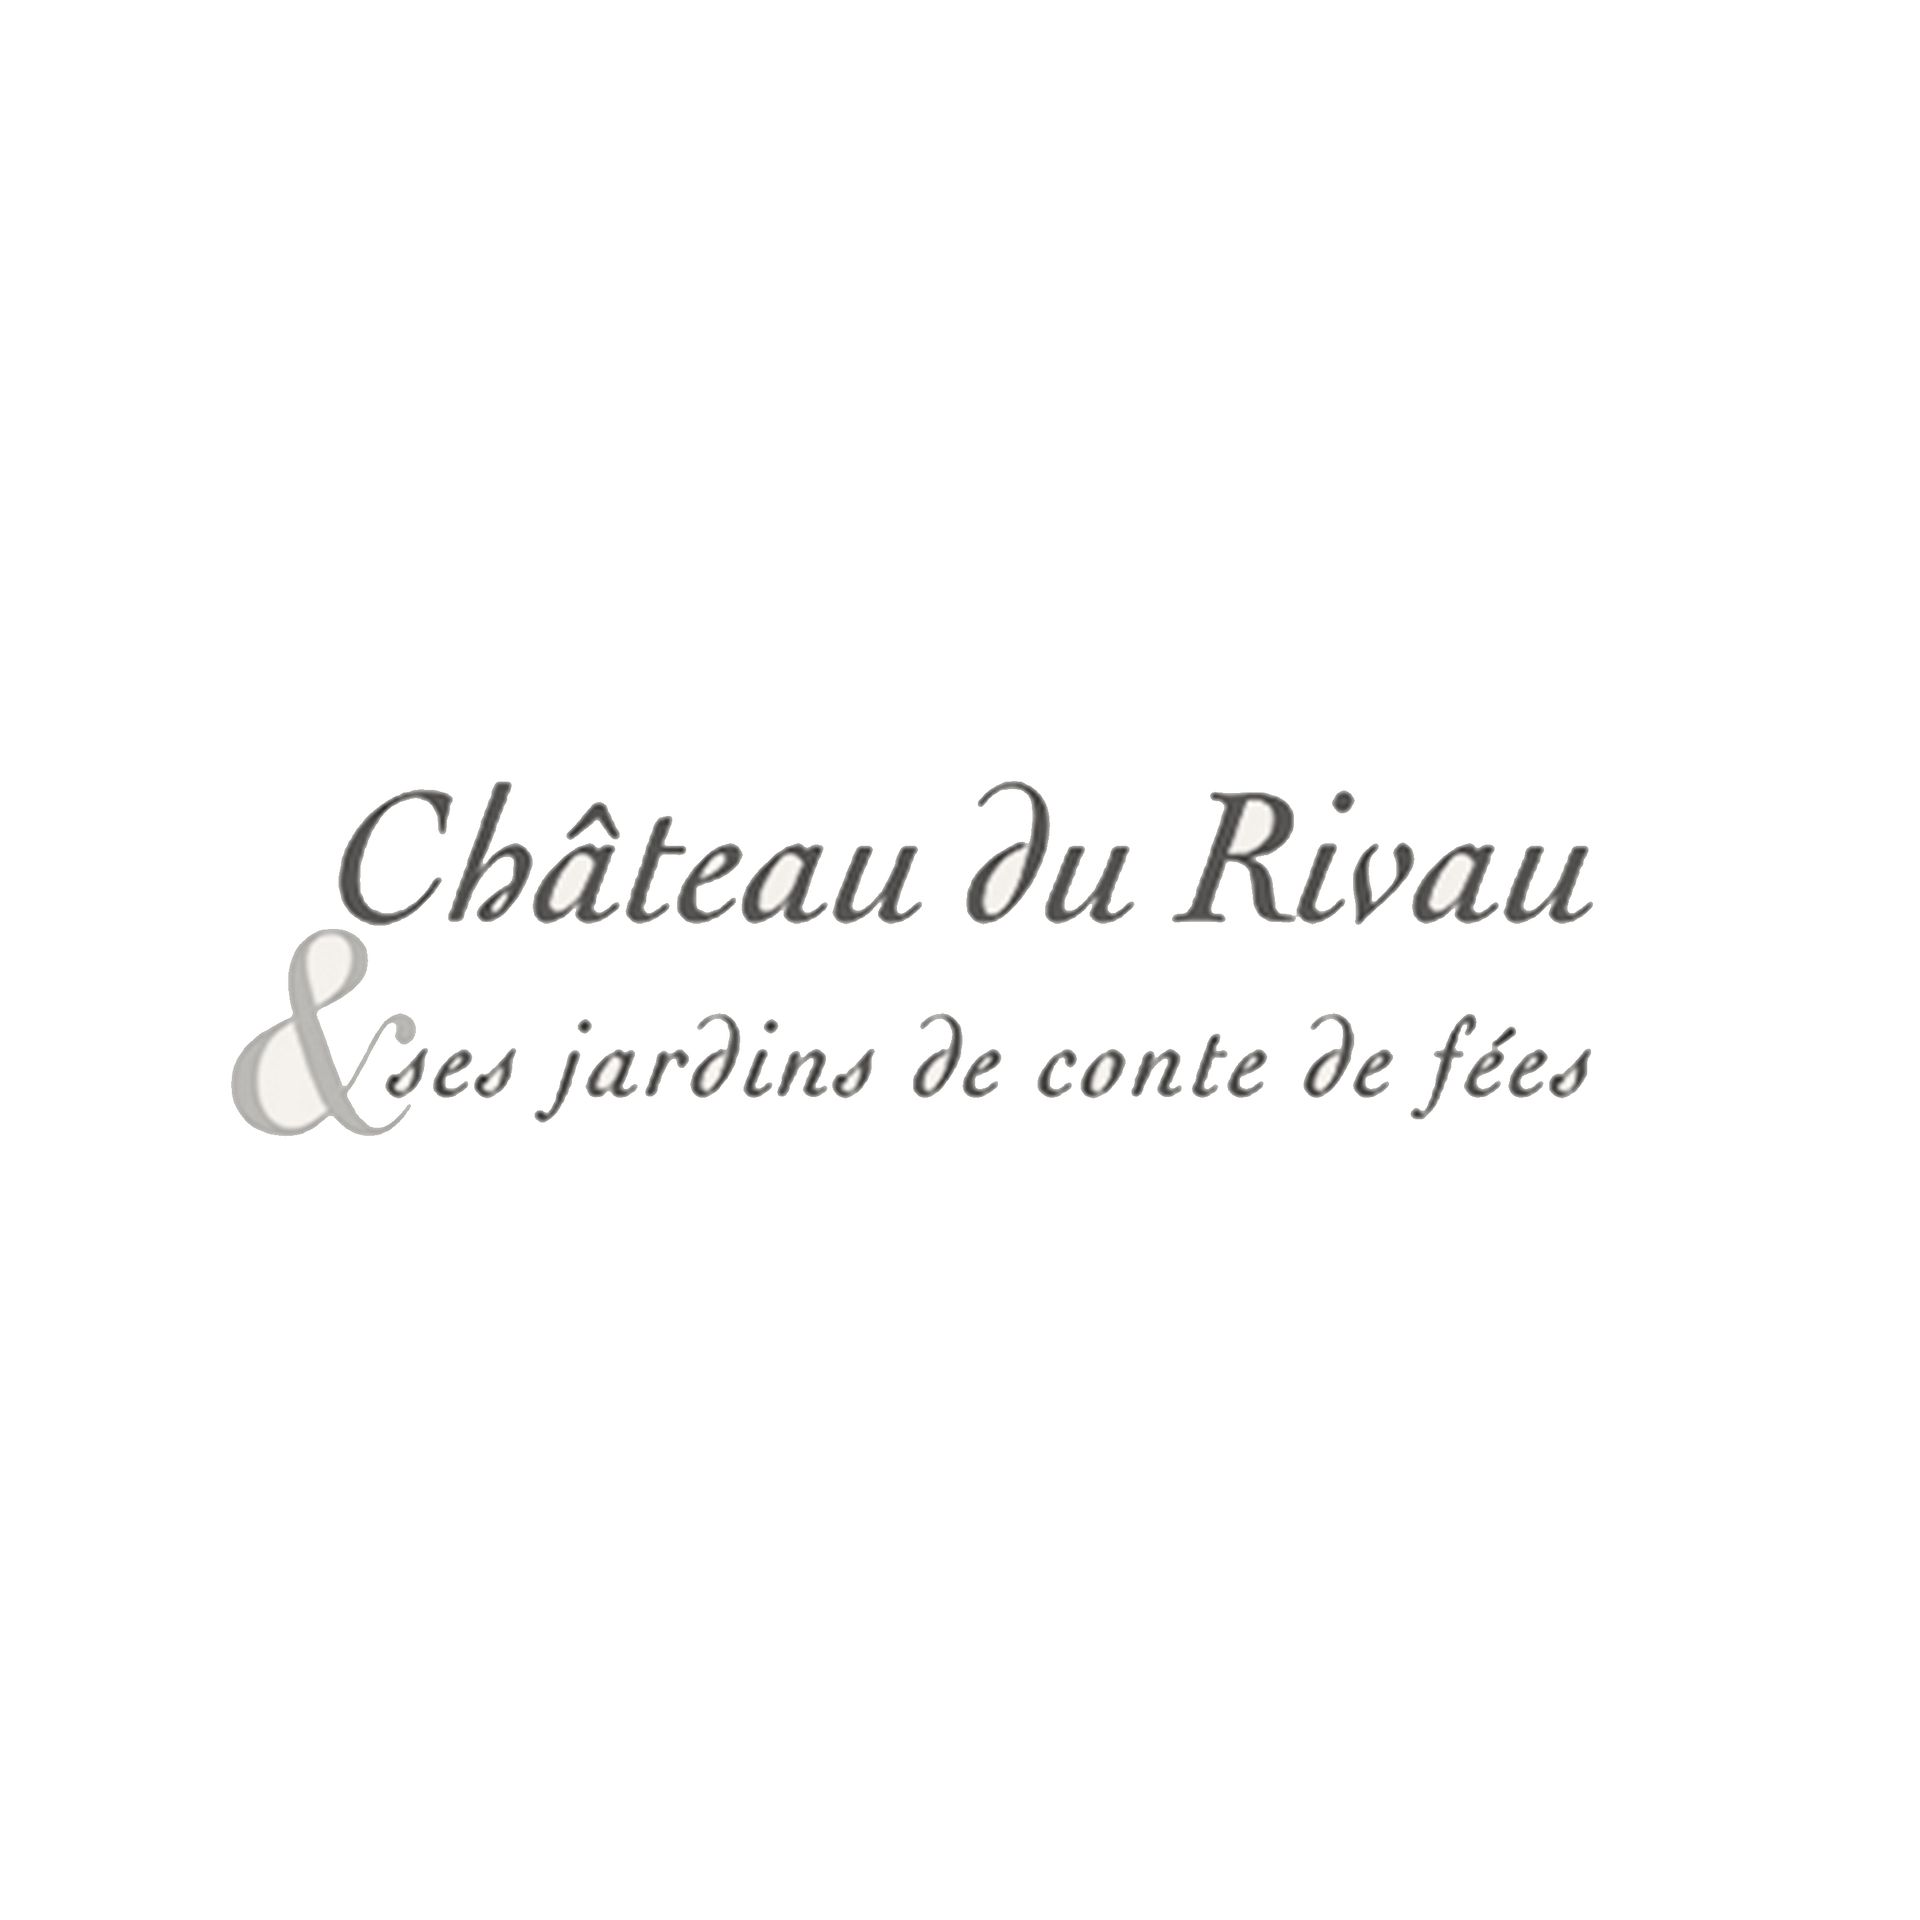 chateau-du-rivau-logo